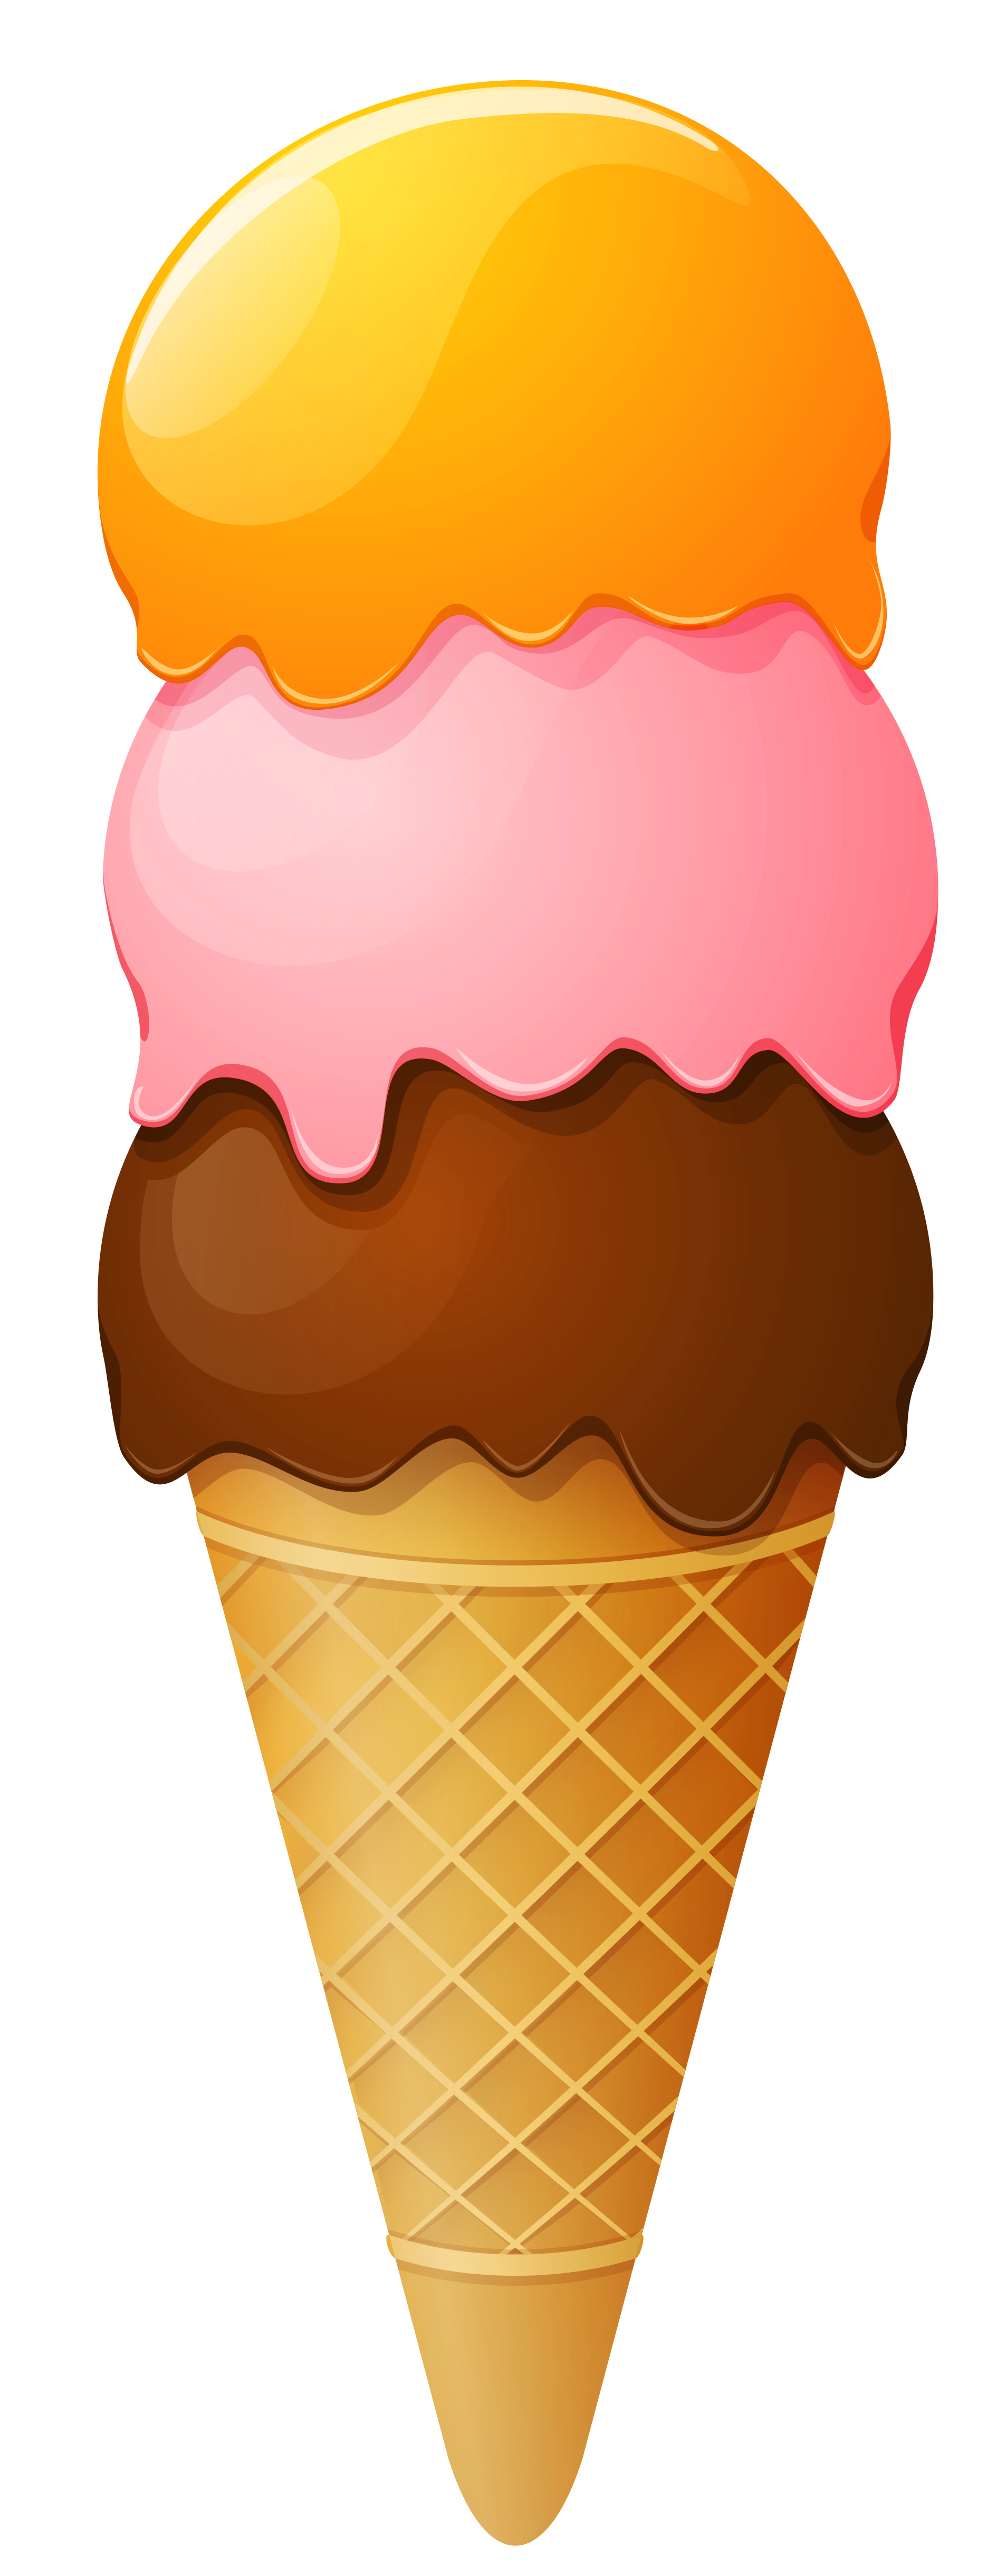 Transparent Ice Cream Cone PNG Clipart Picture 